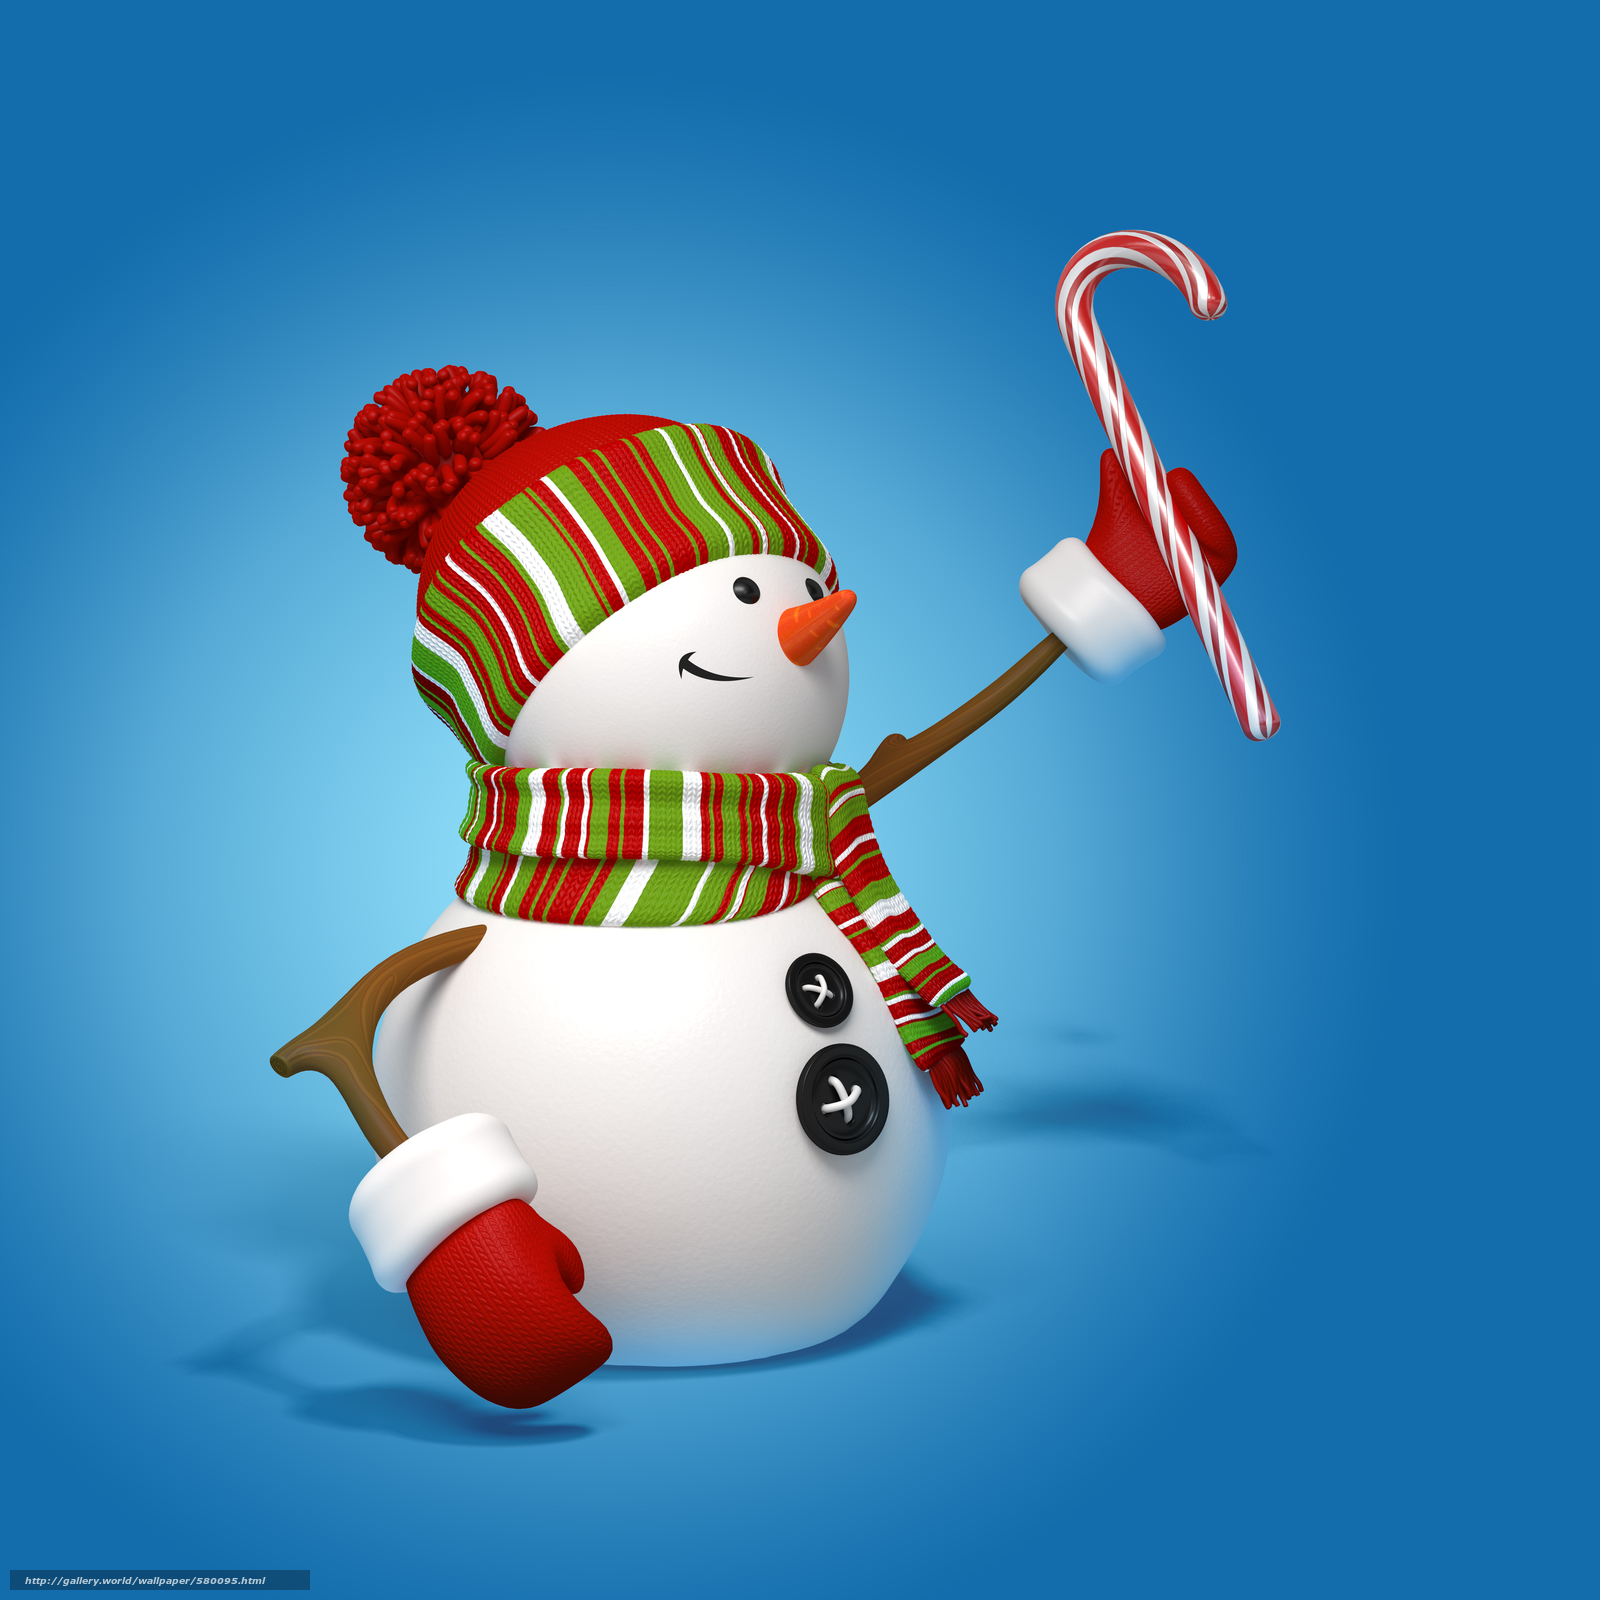 Wallpaper Snowman Desktop In The Resolution